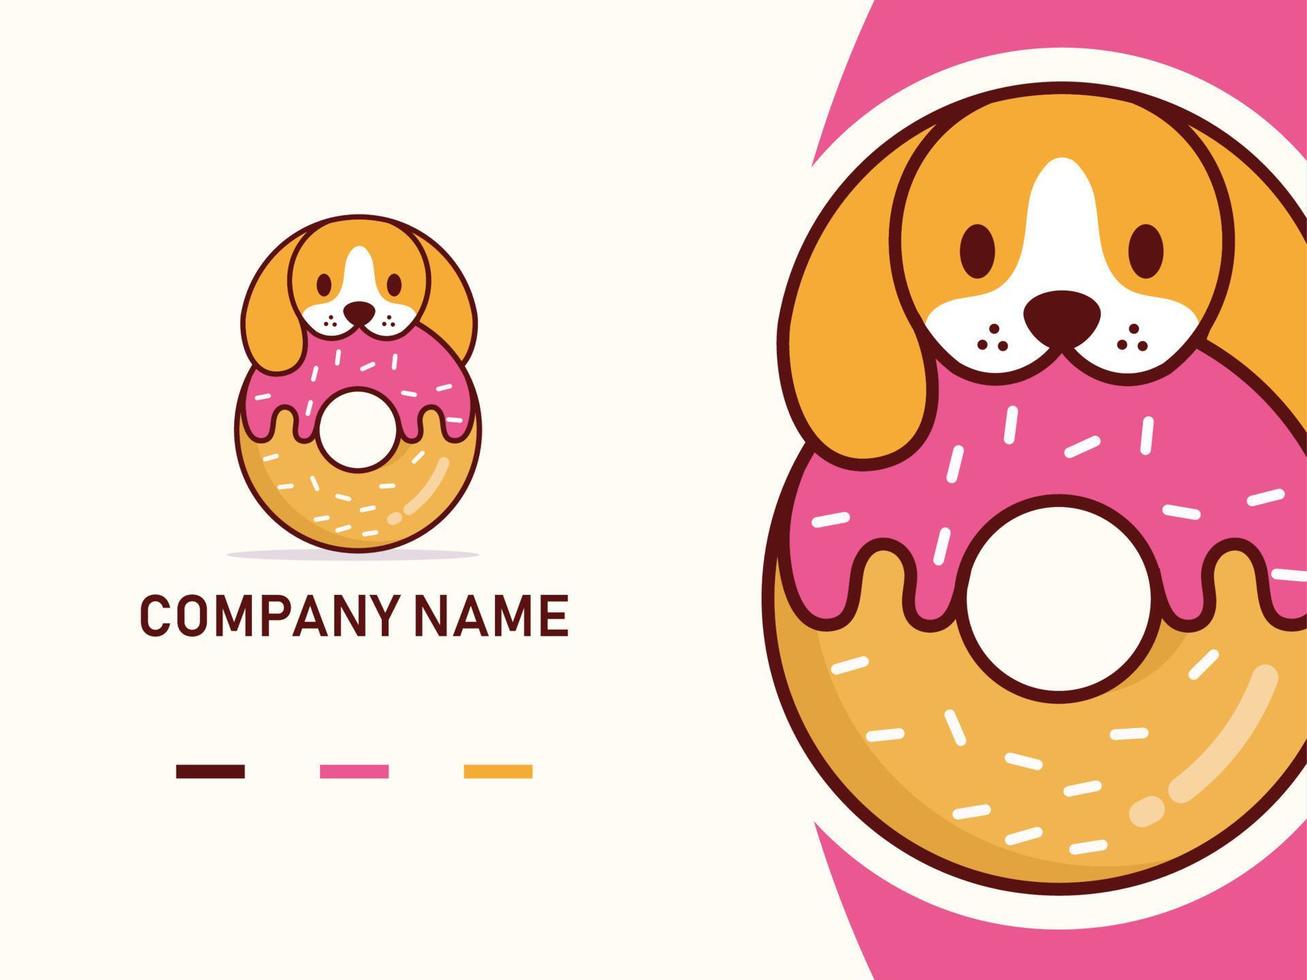 Premium quality isolated cute donut dog mascot logo design template vector